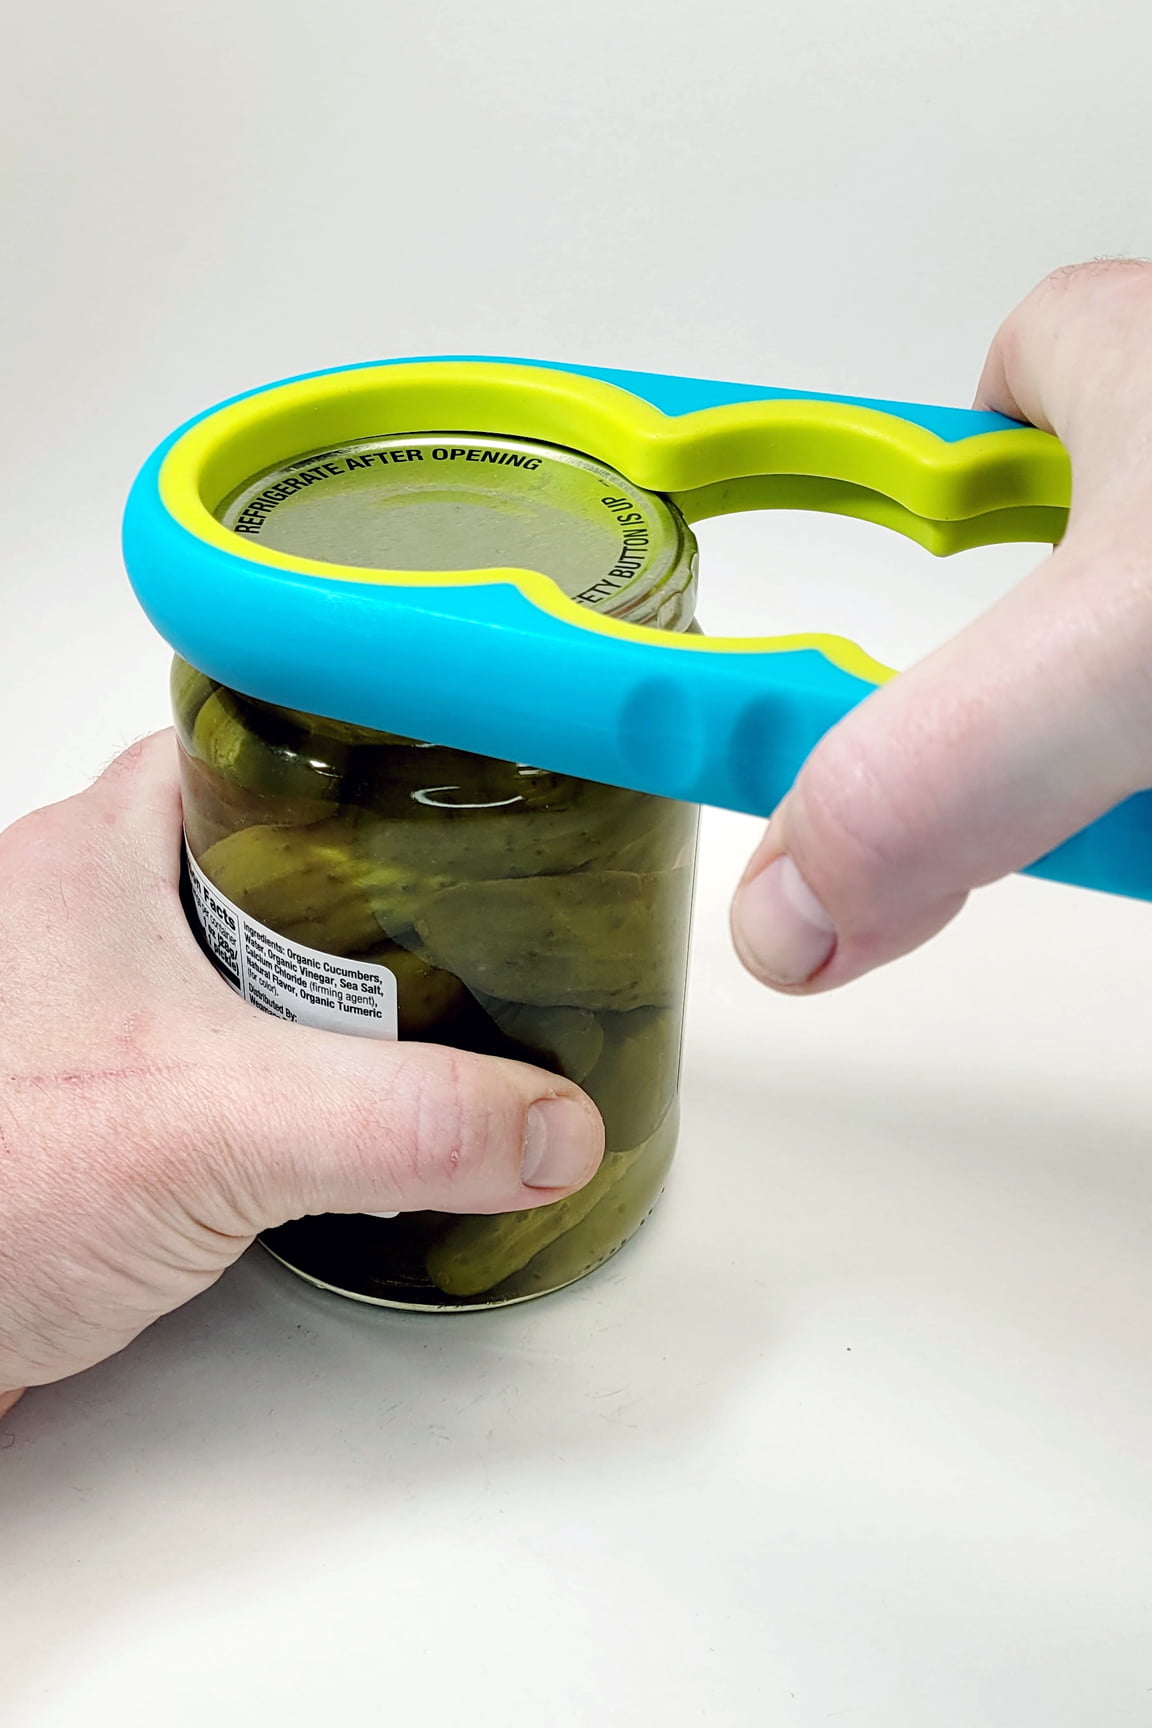 One Simply Terrific Thing: The Grip Jar Opener